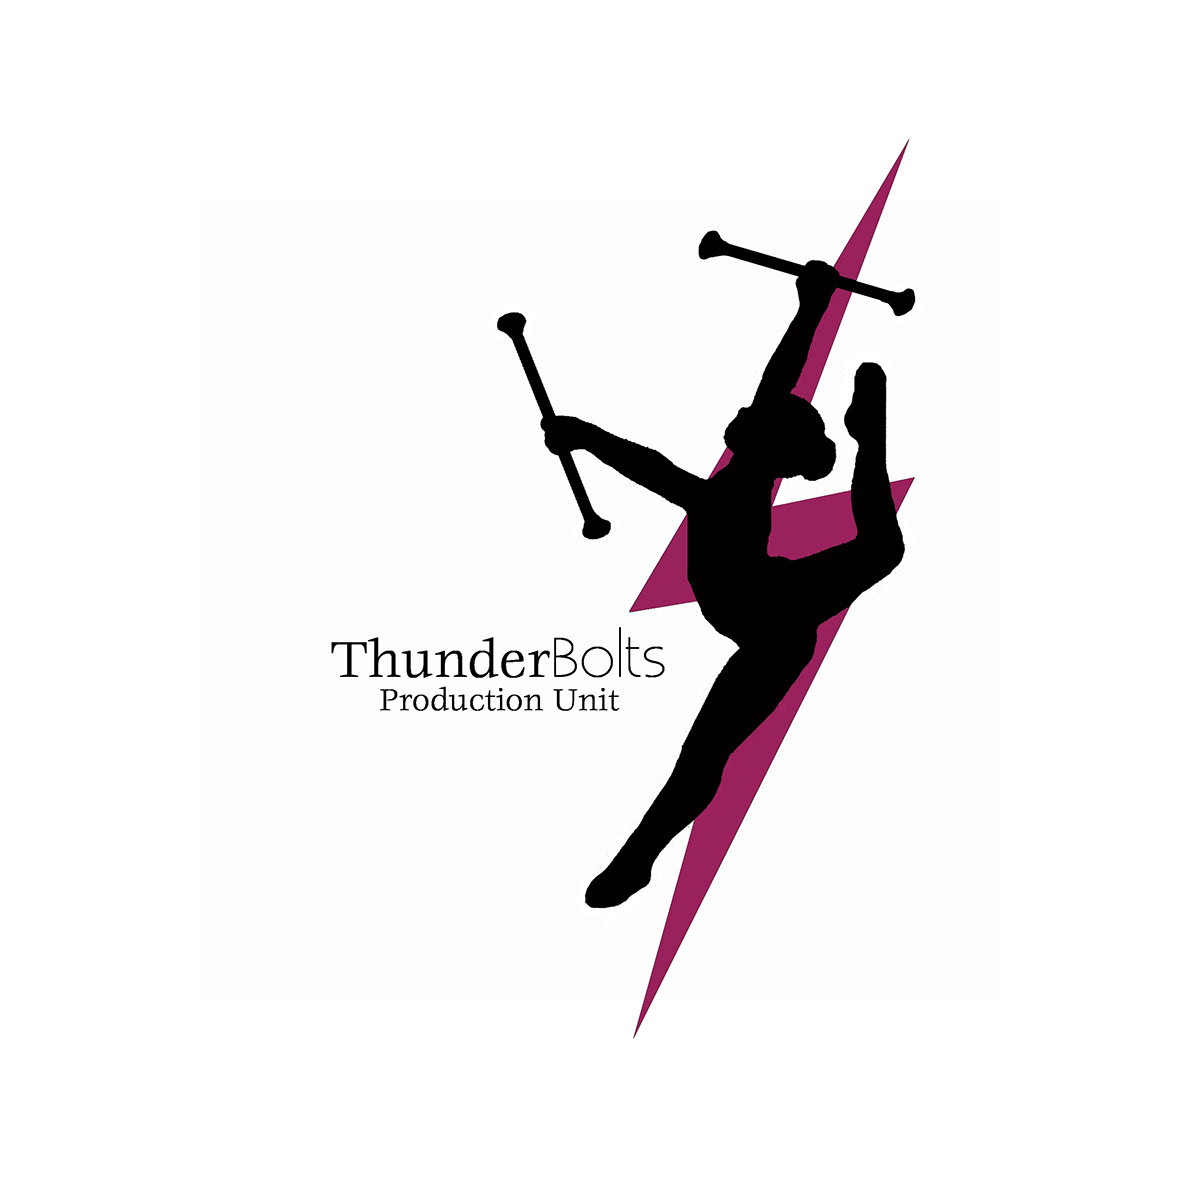 Baton  production unit  thunder  bolts  thunder bolts  logo